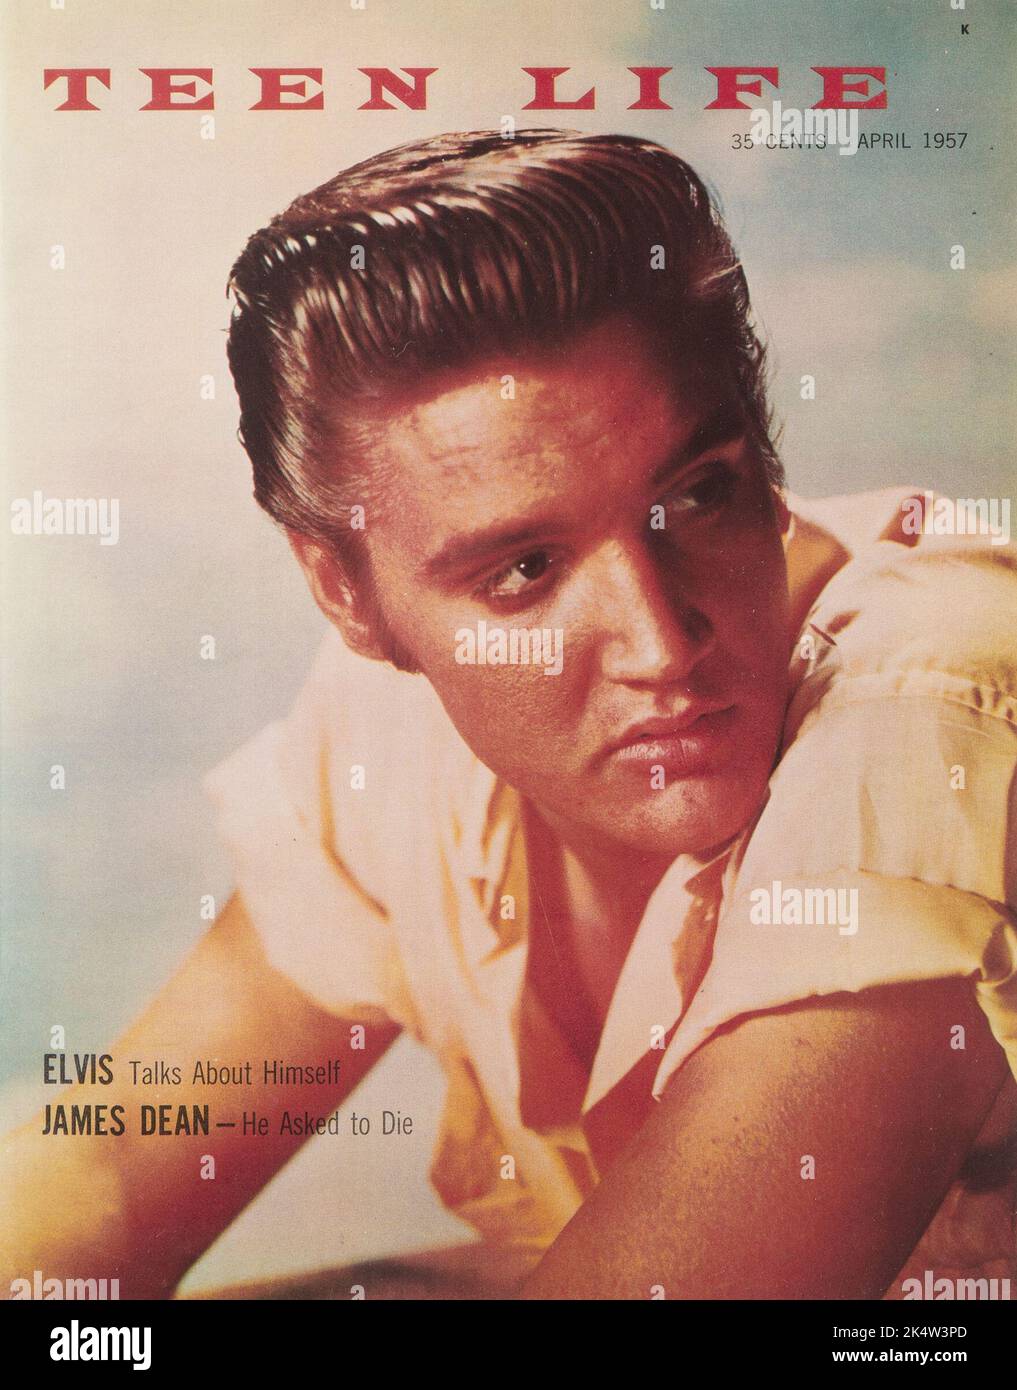 Teen Life Magazine cover #1 (Filosa Publications, 1957) Elvis talks about himself Stock Photo